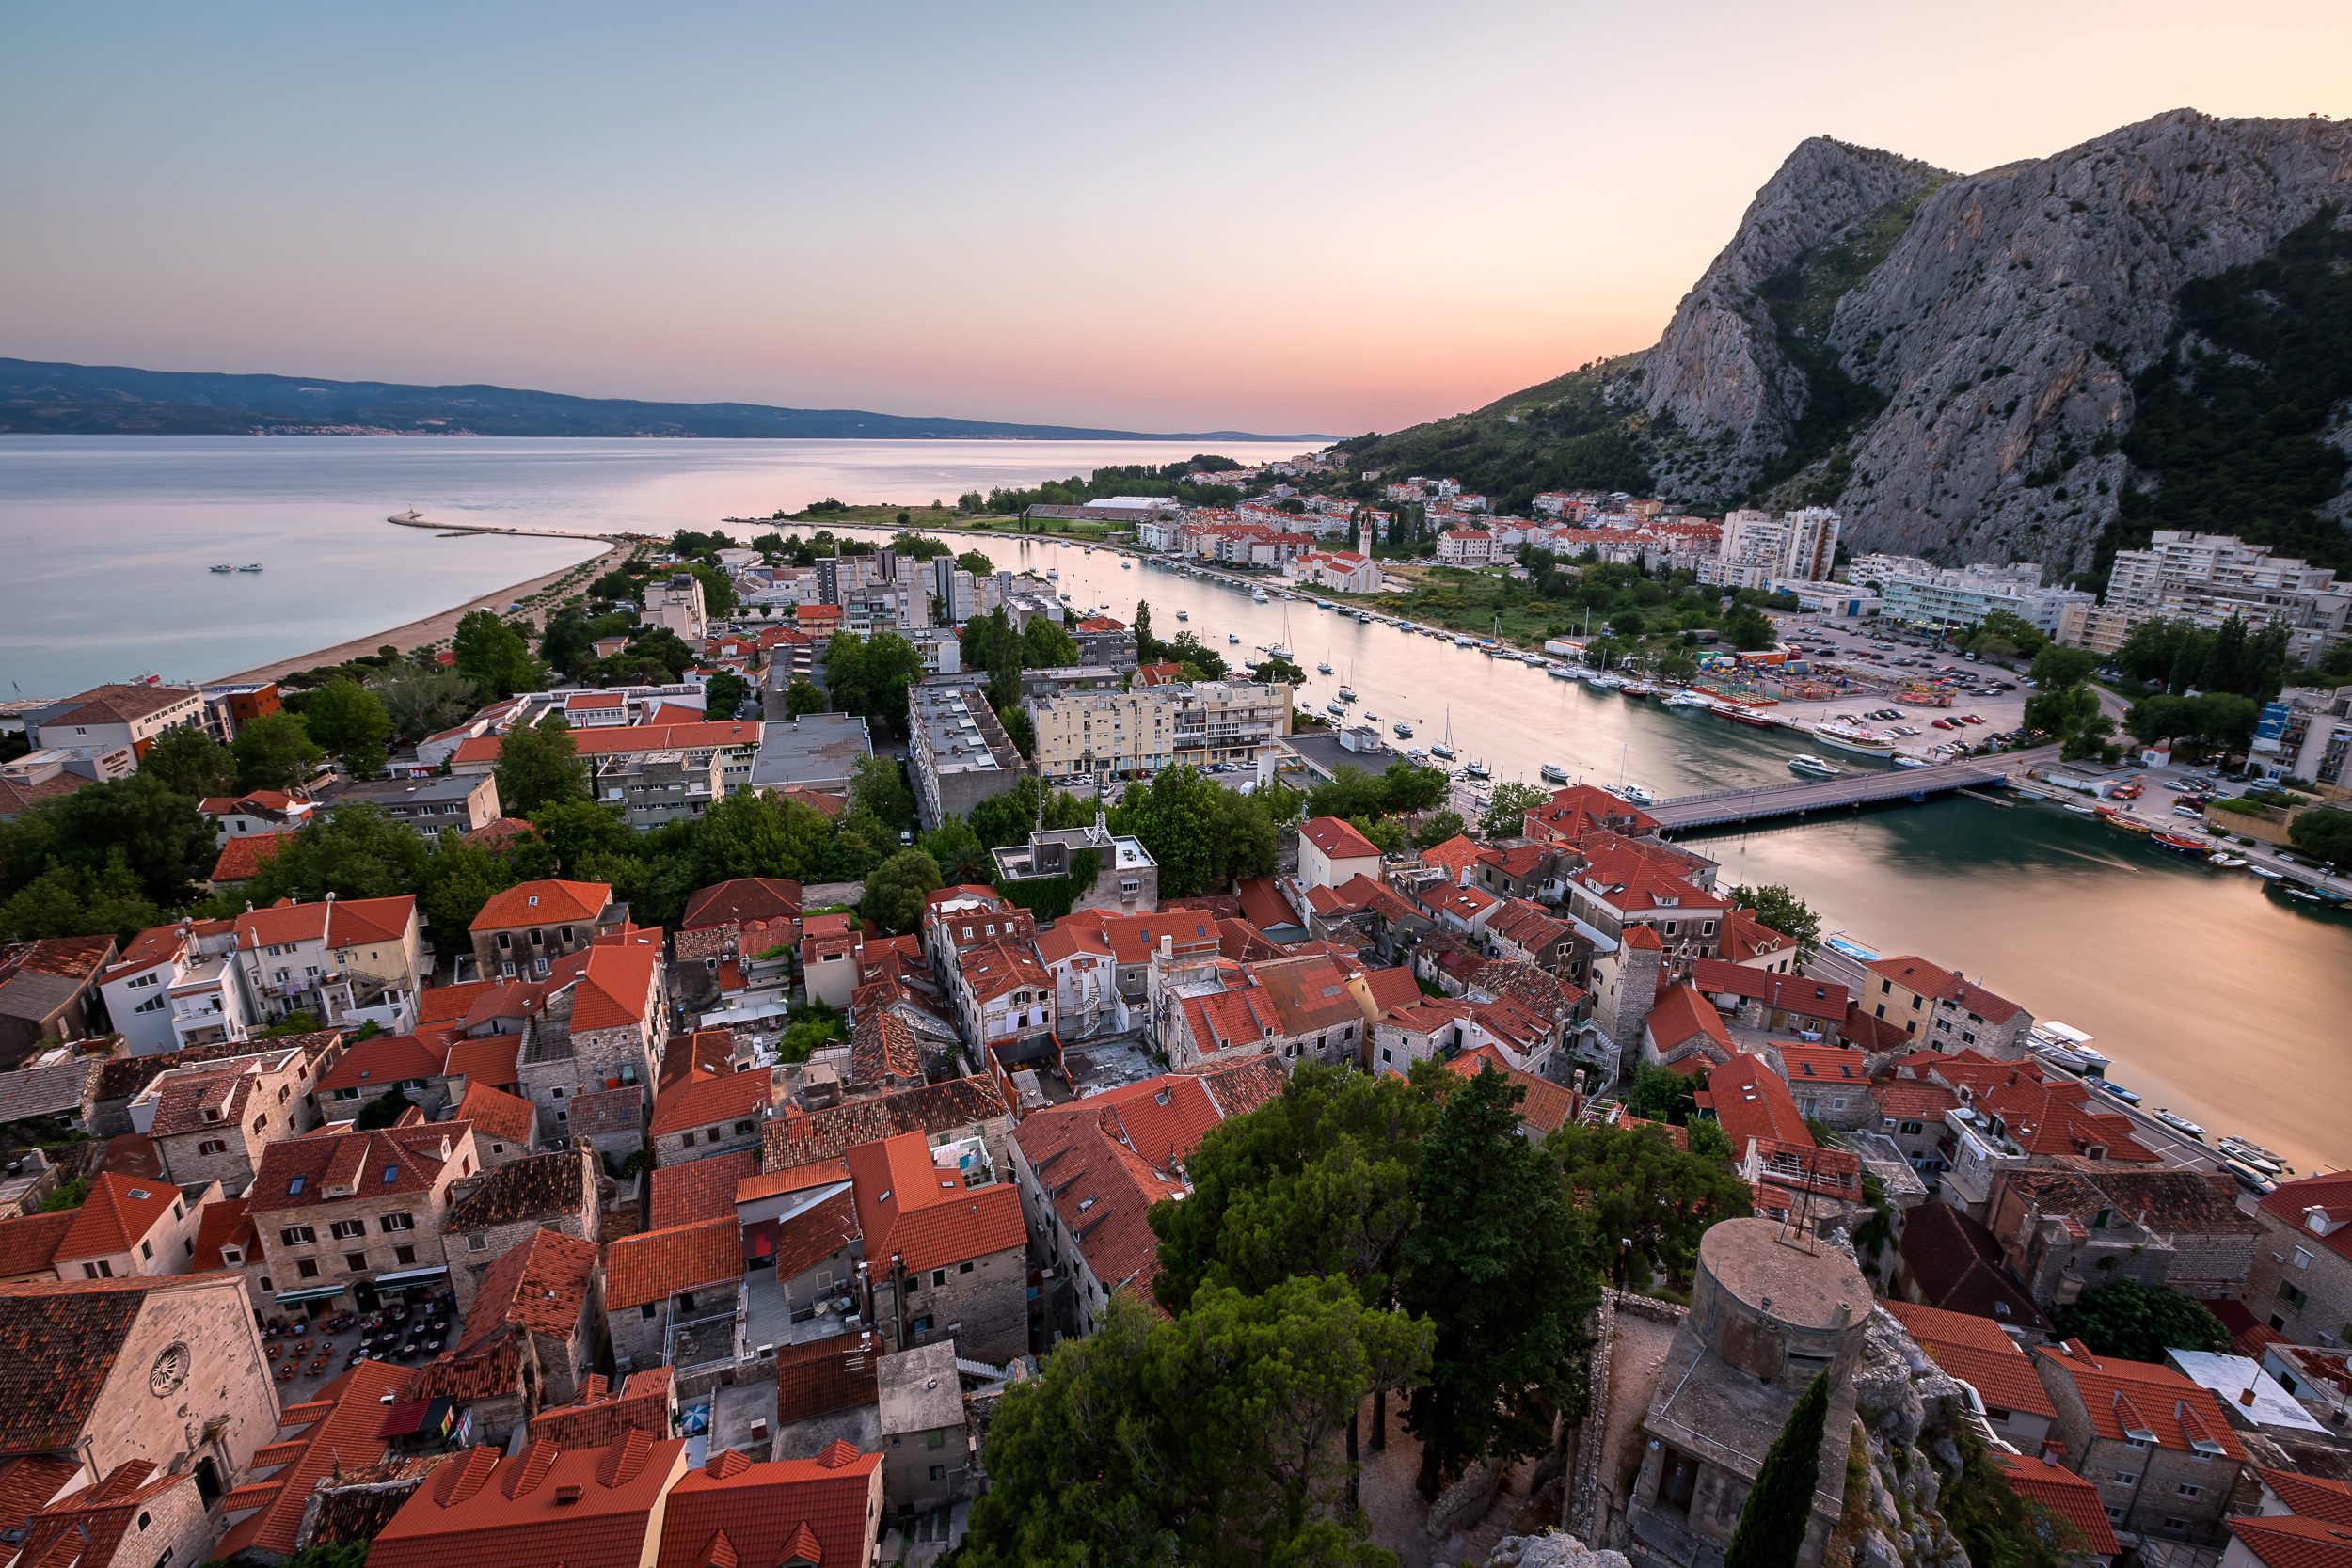 Adriatic Sea, HD wallpapers, Coastal beauty, Exquisite scenery, 2500x1670 HD Desktop